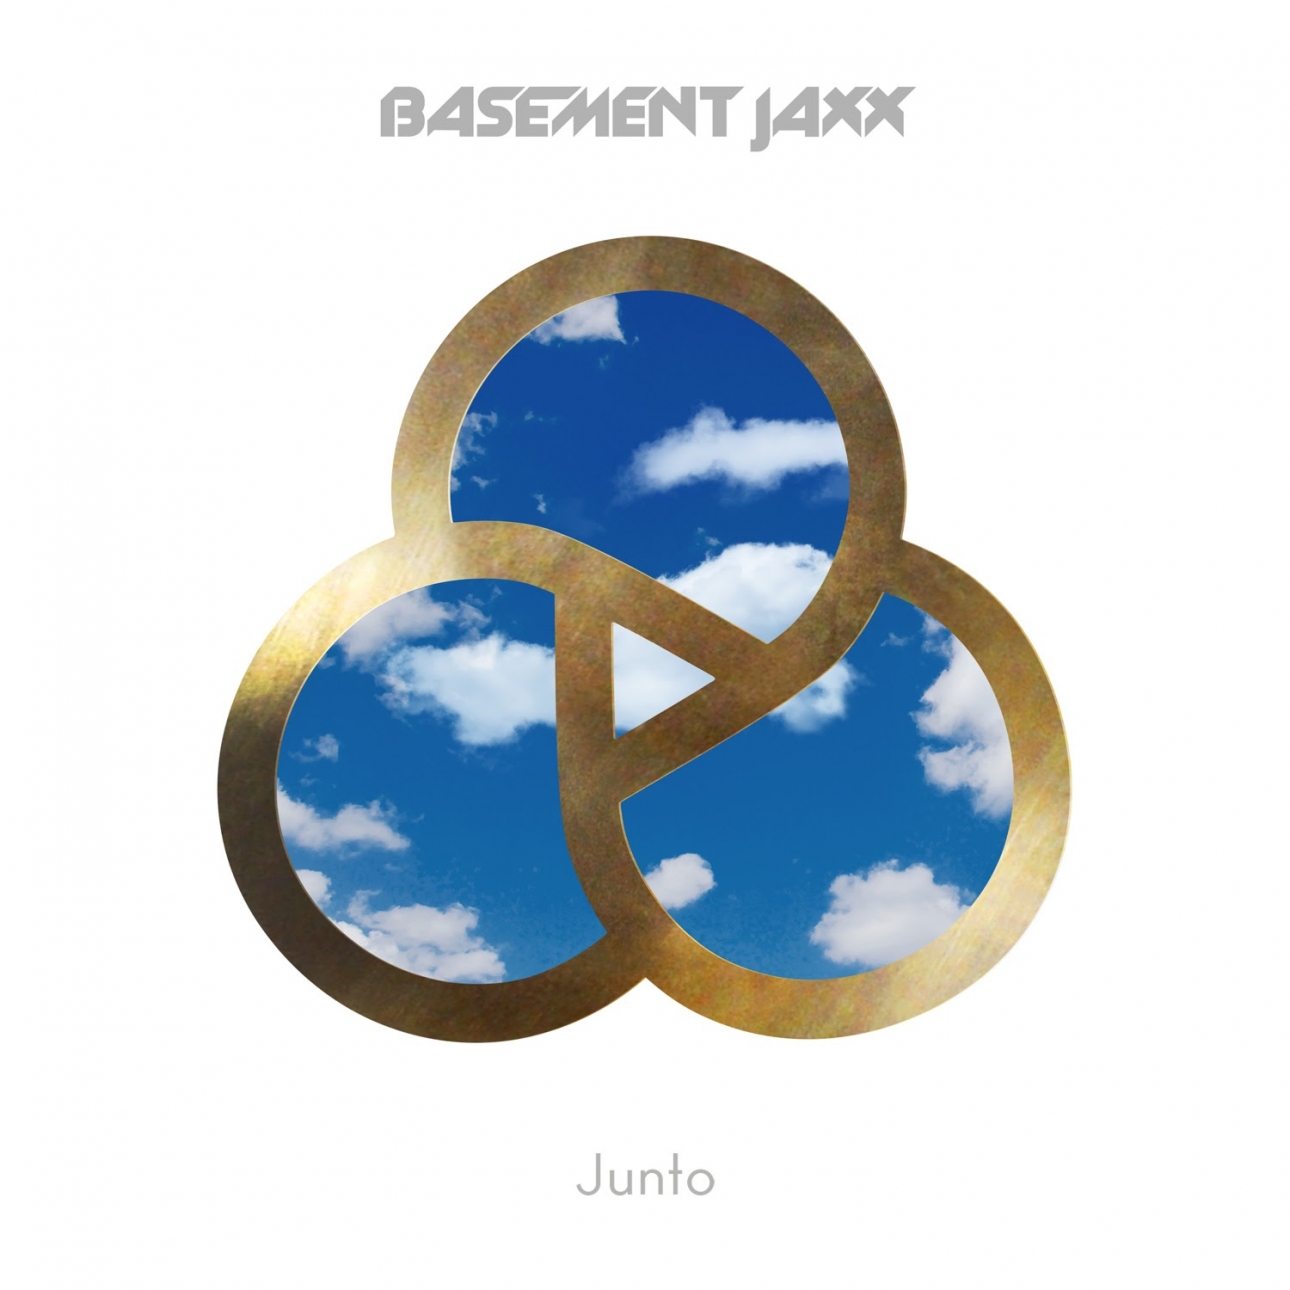 Basement Jaxx stream new album Junto